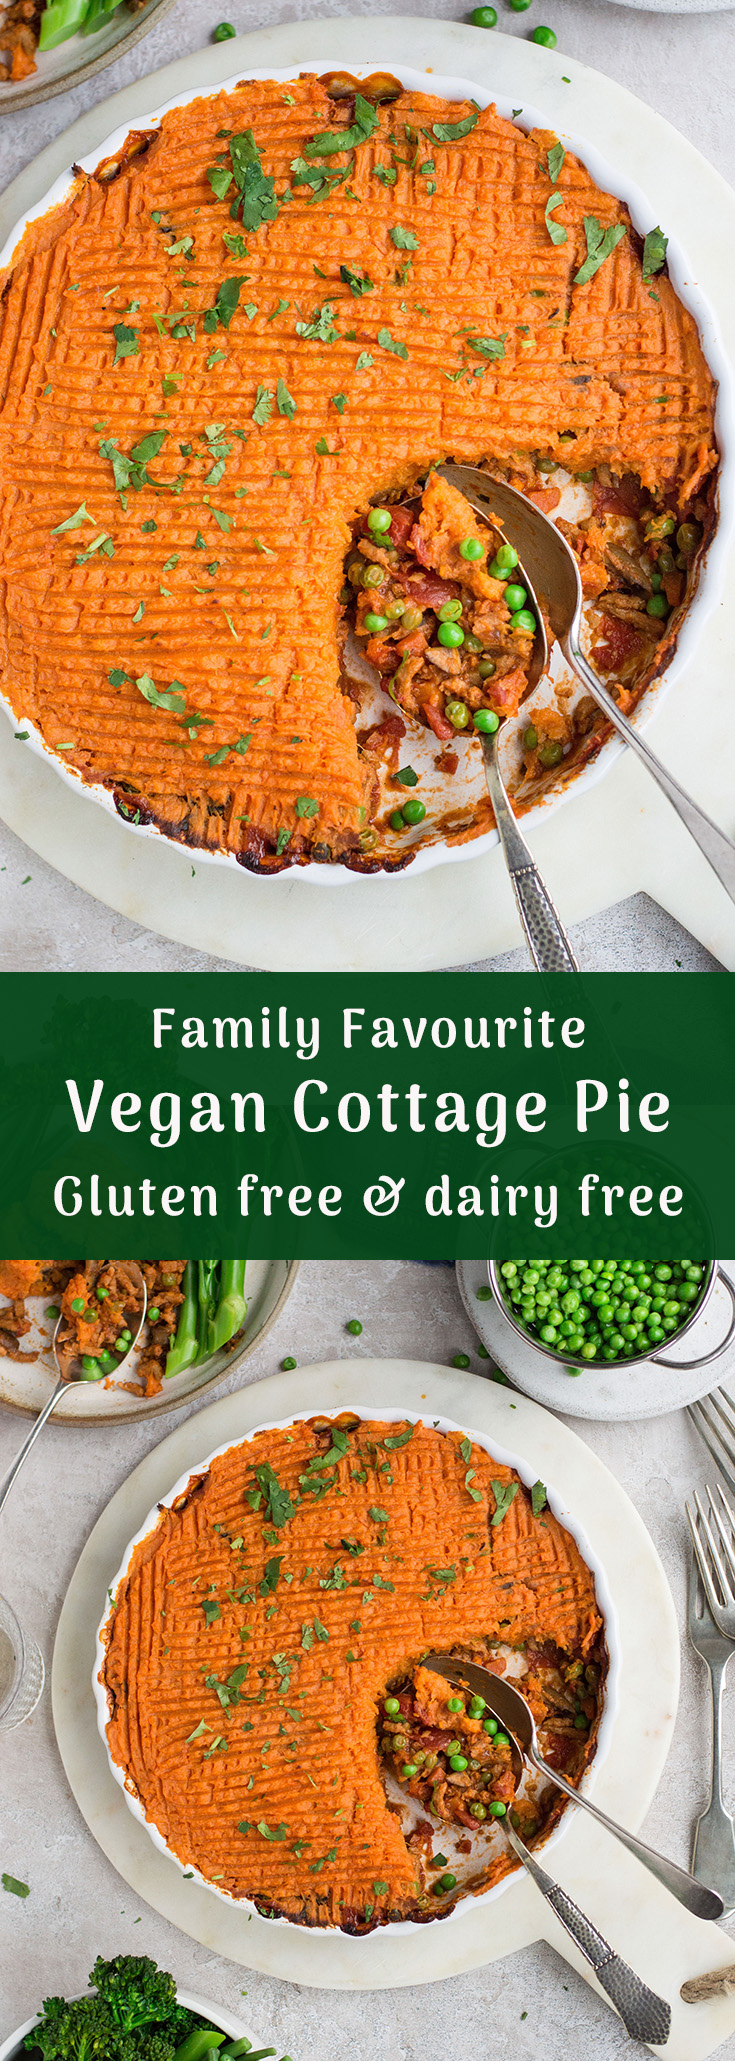 Vegan cottage pie & sweet potato mash in a round white dish